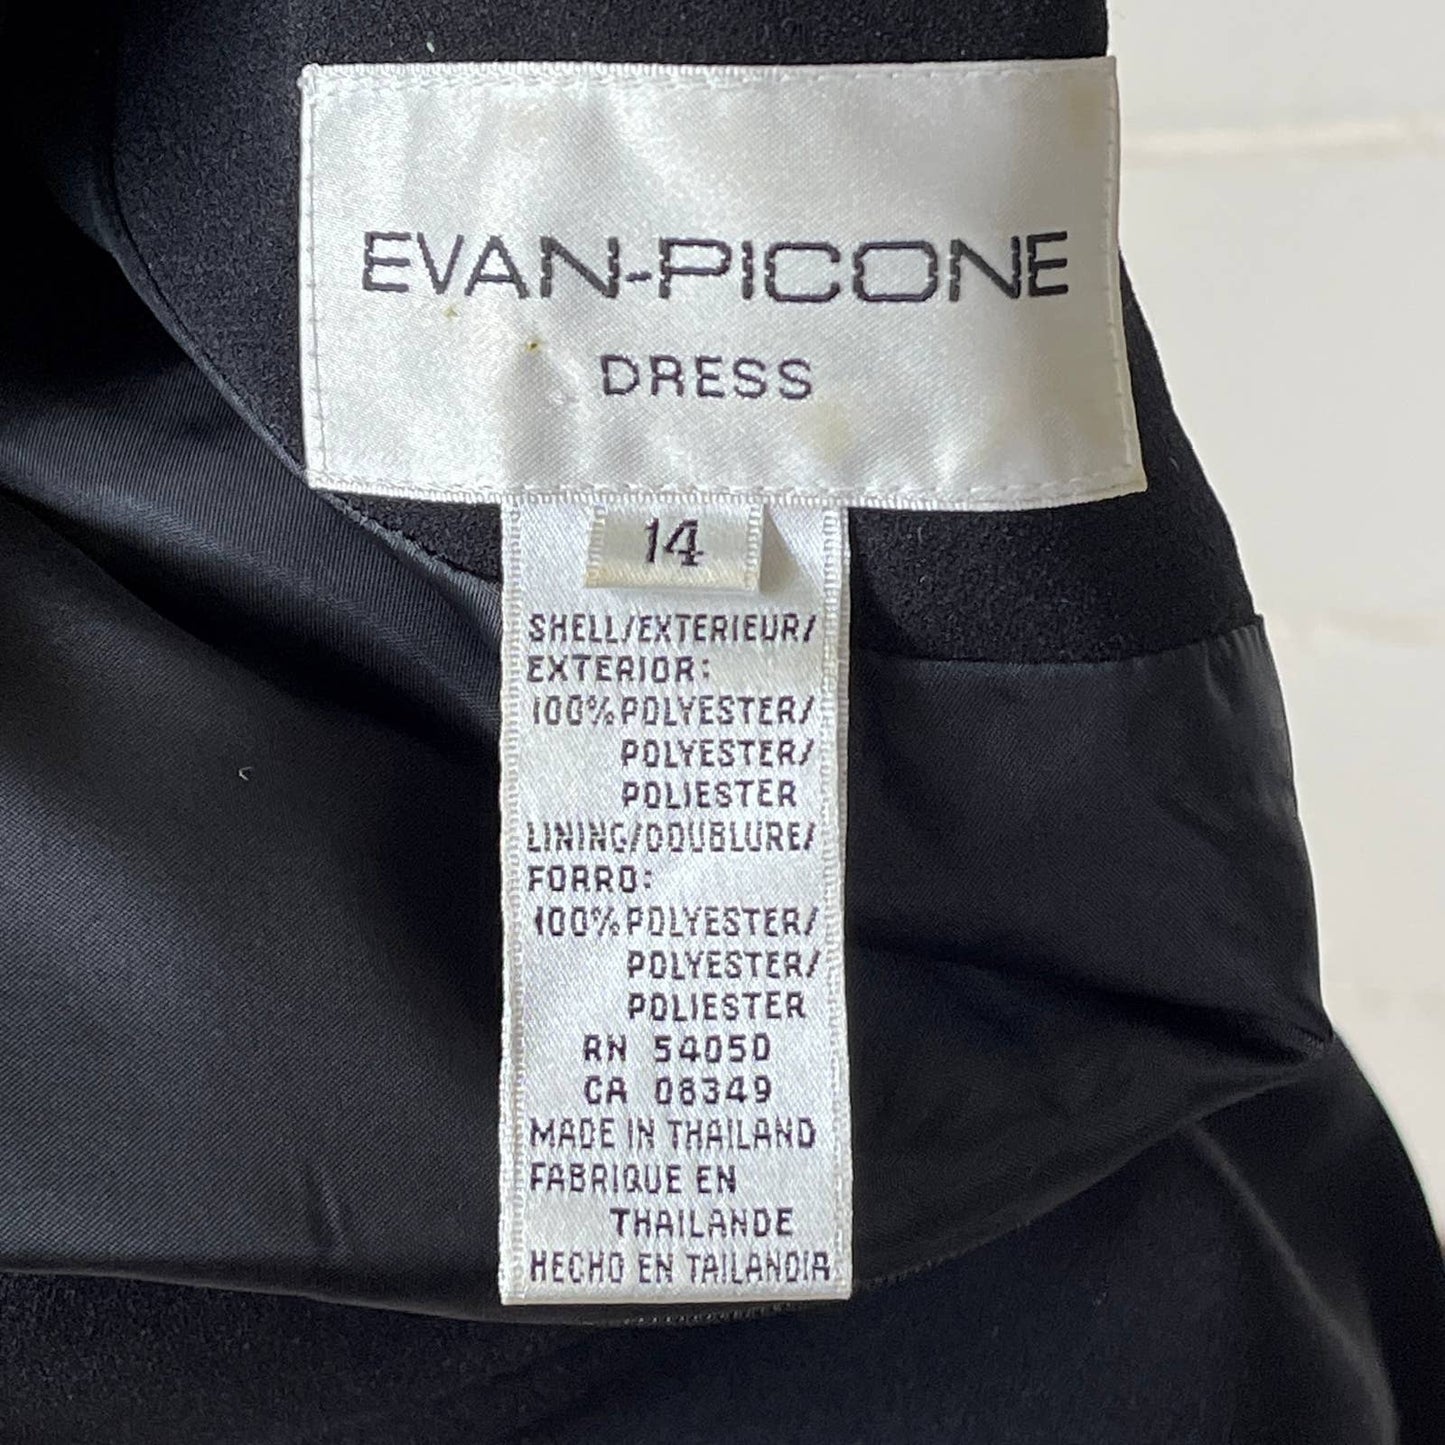 Vintage 80s Black Midi Dress Metal Star Buttons Short Sleeve Volup Evan Picone L